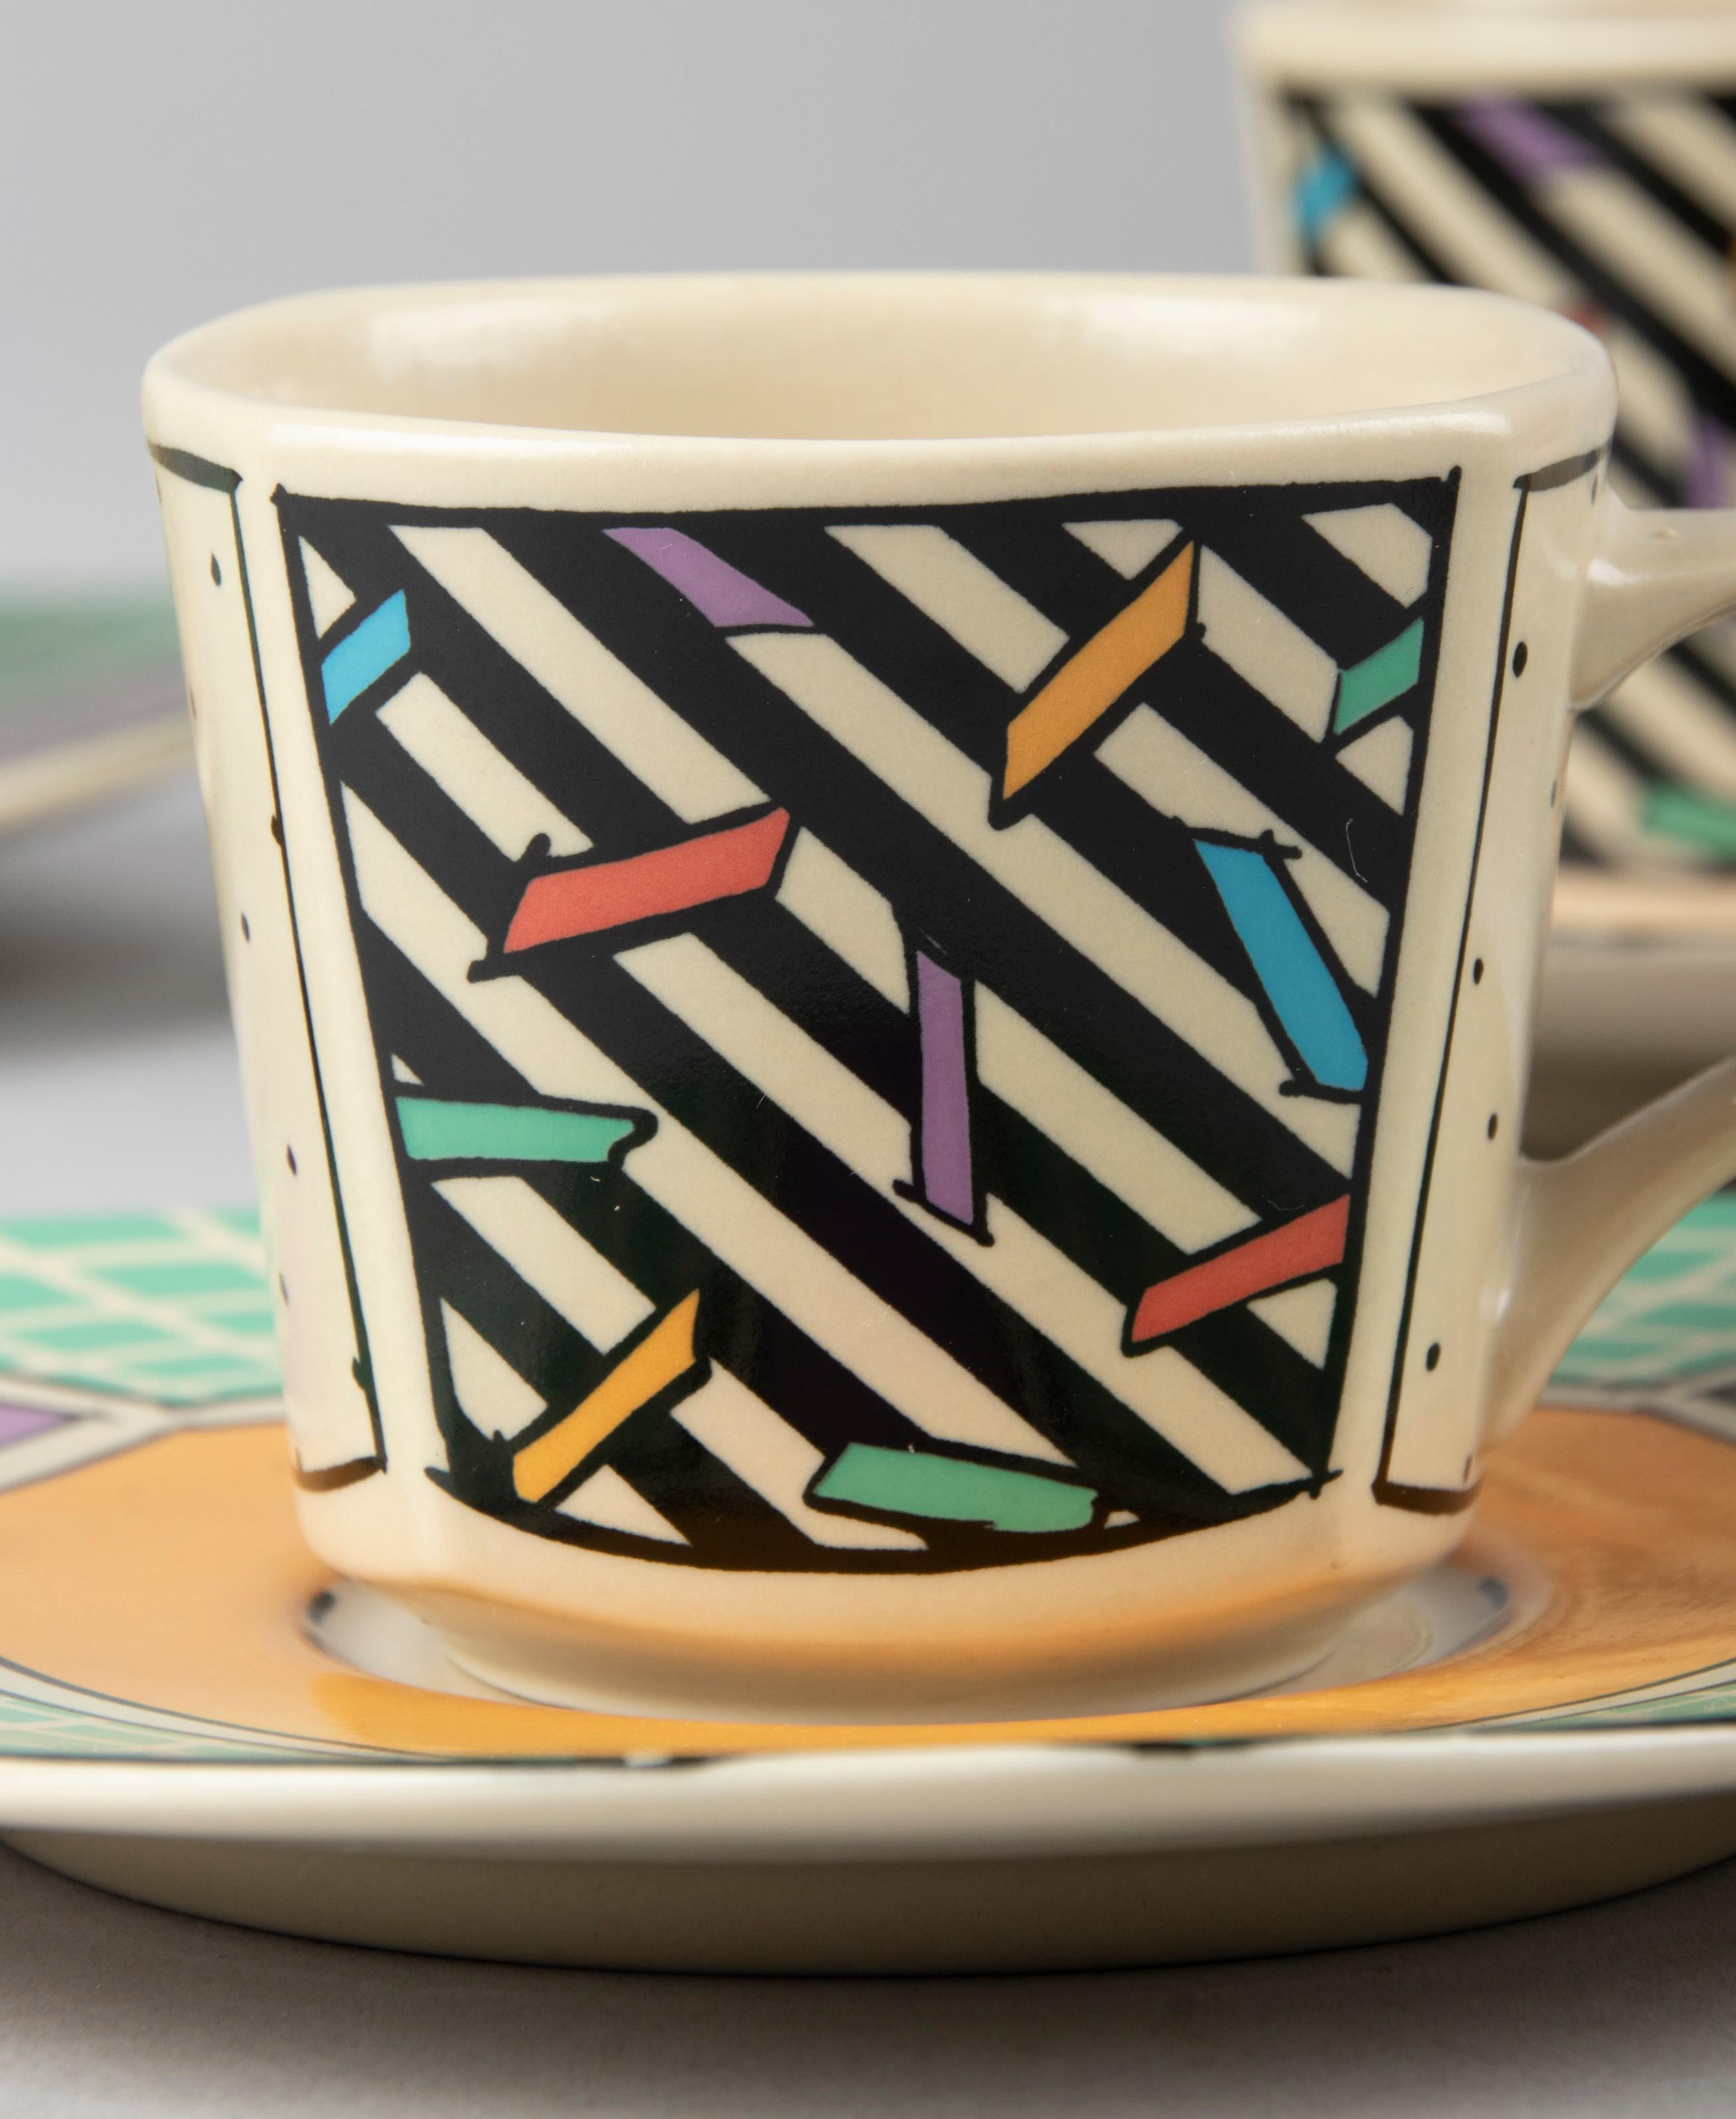 German Set of 6 Pop-Art Style Rosenthal Flash Espresso Cups by Dorothy Hafner